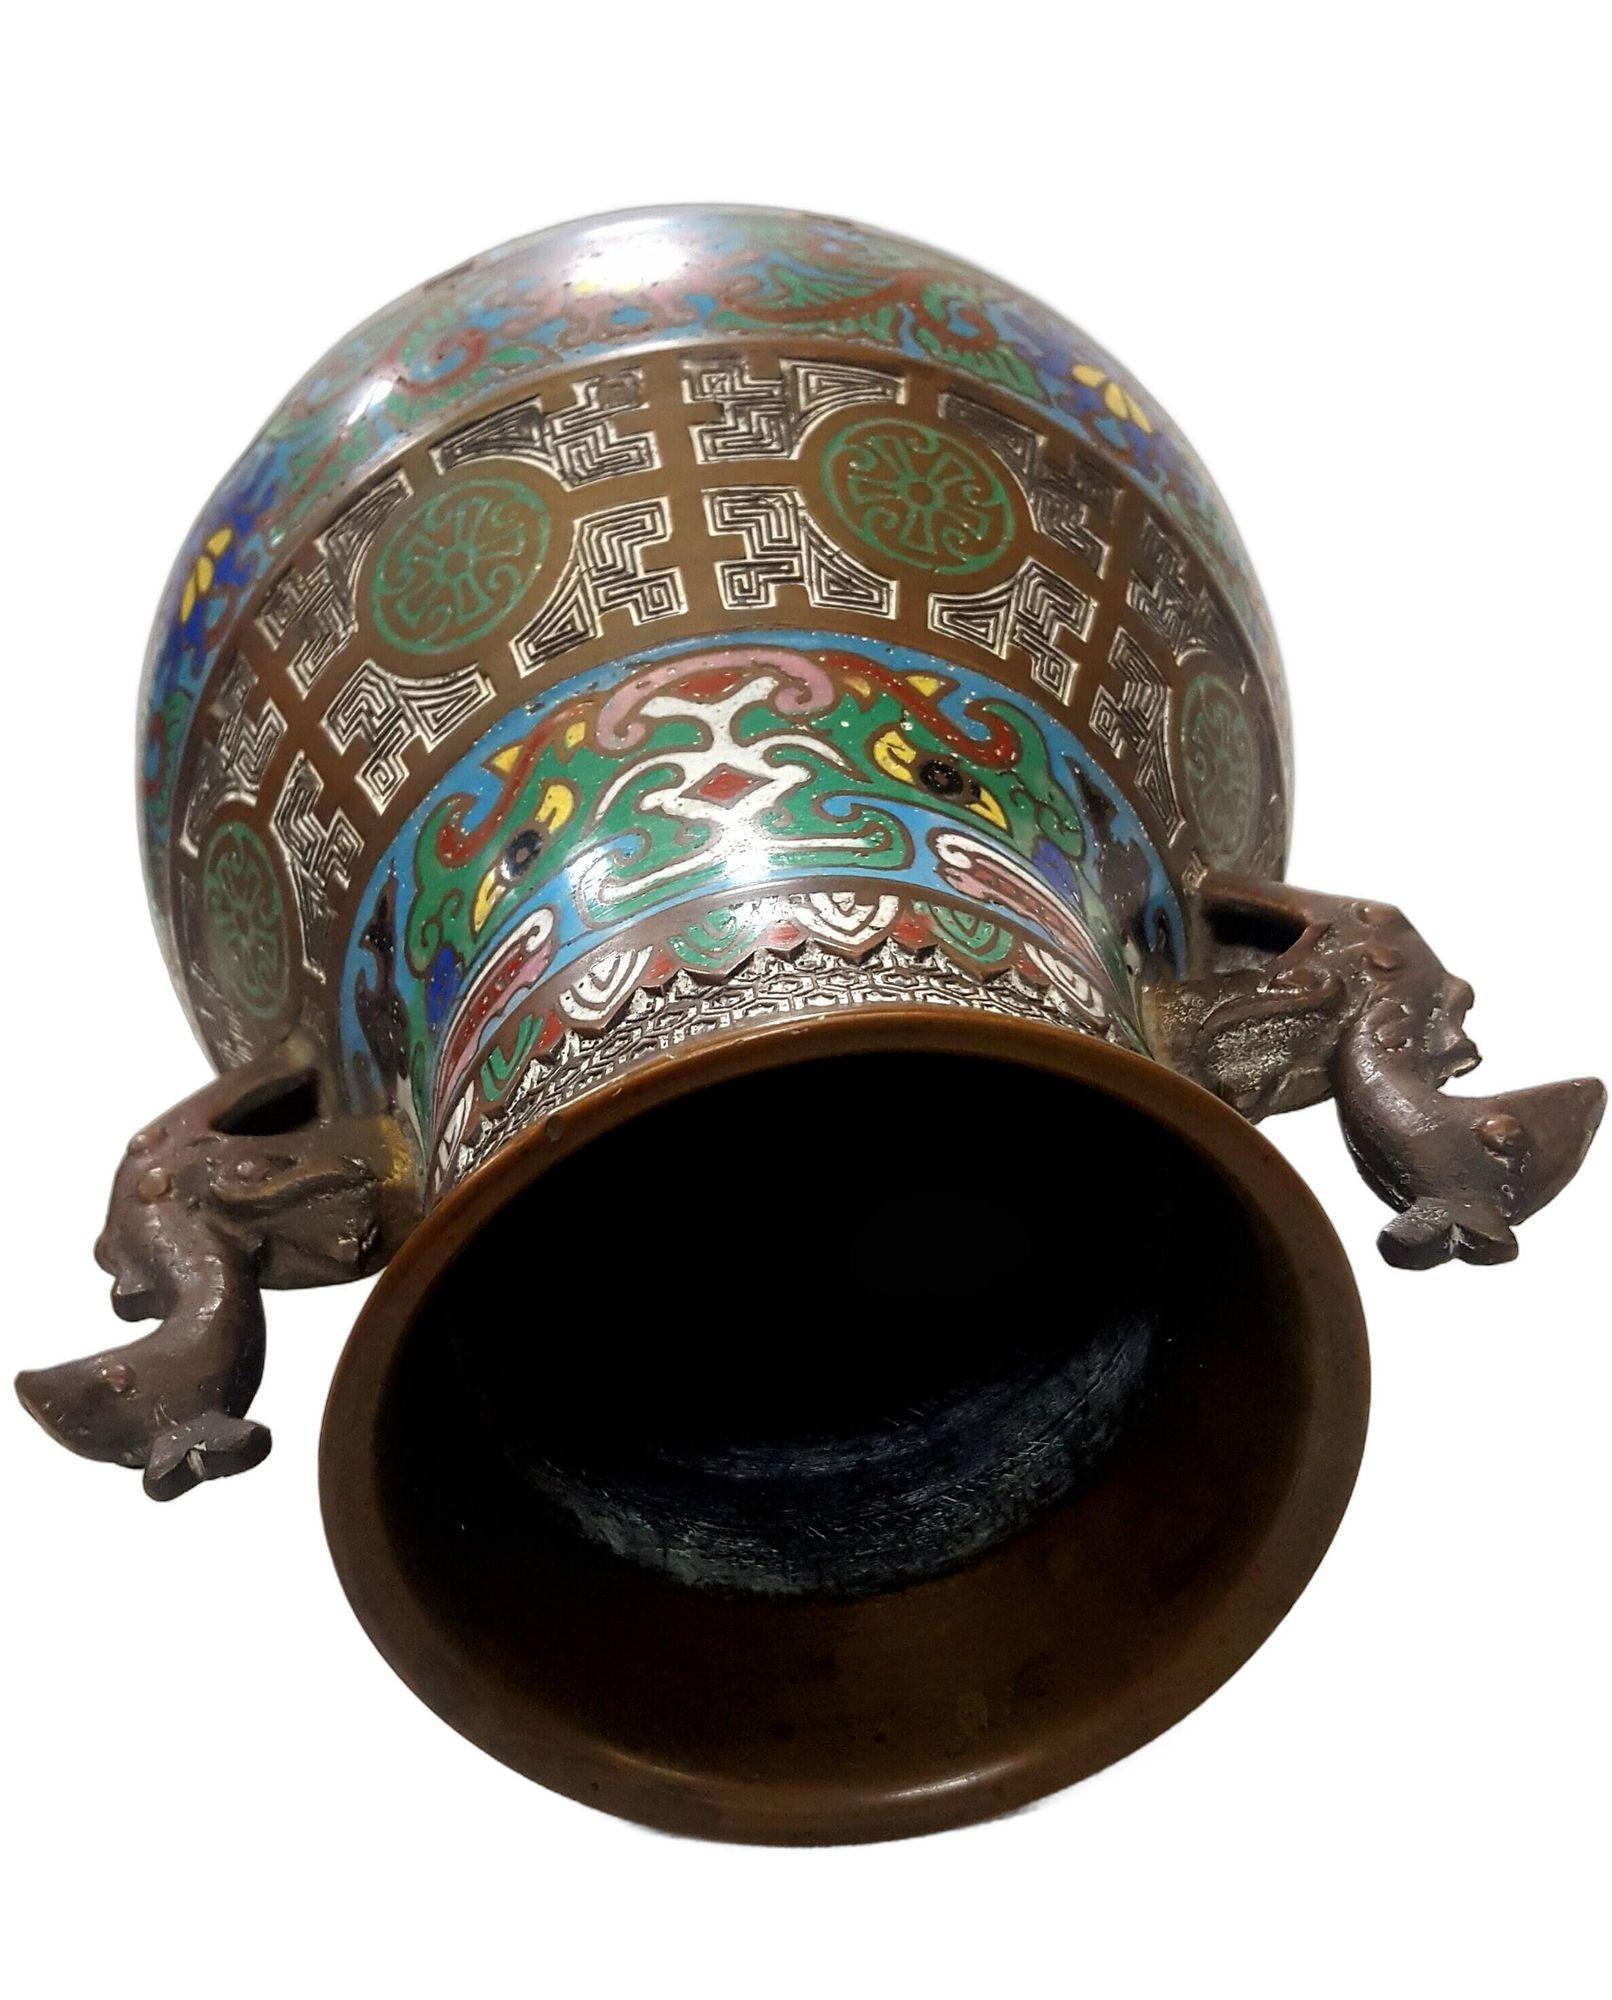 Antique Japanese Enamel-Over-Bronze Champleve Vase w/Peacock Handles 1